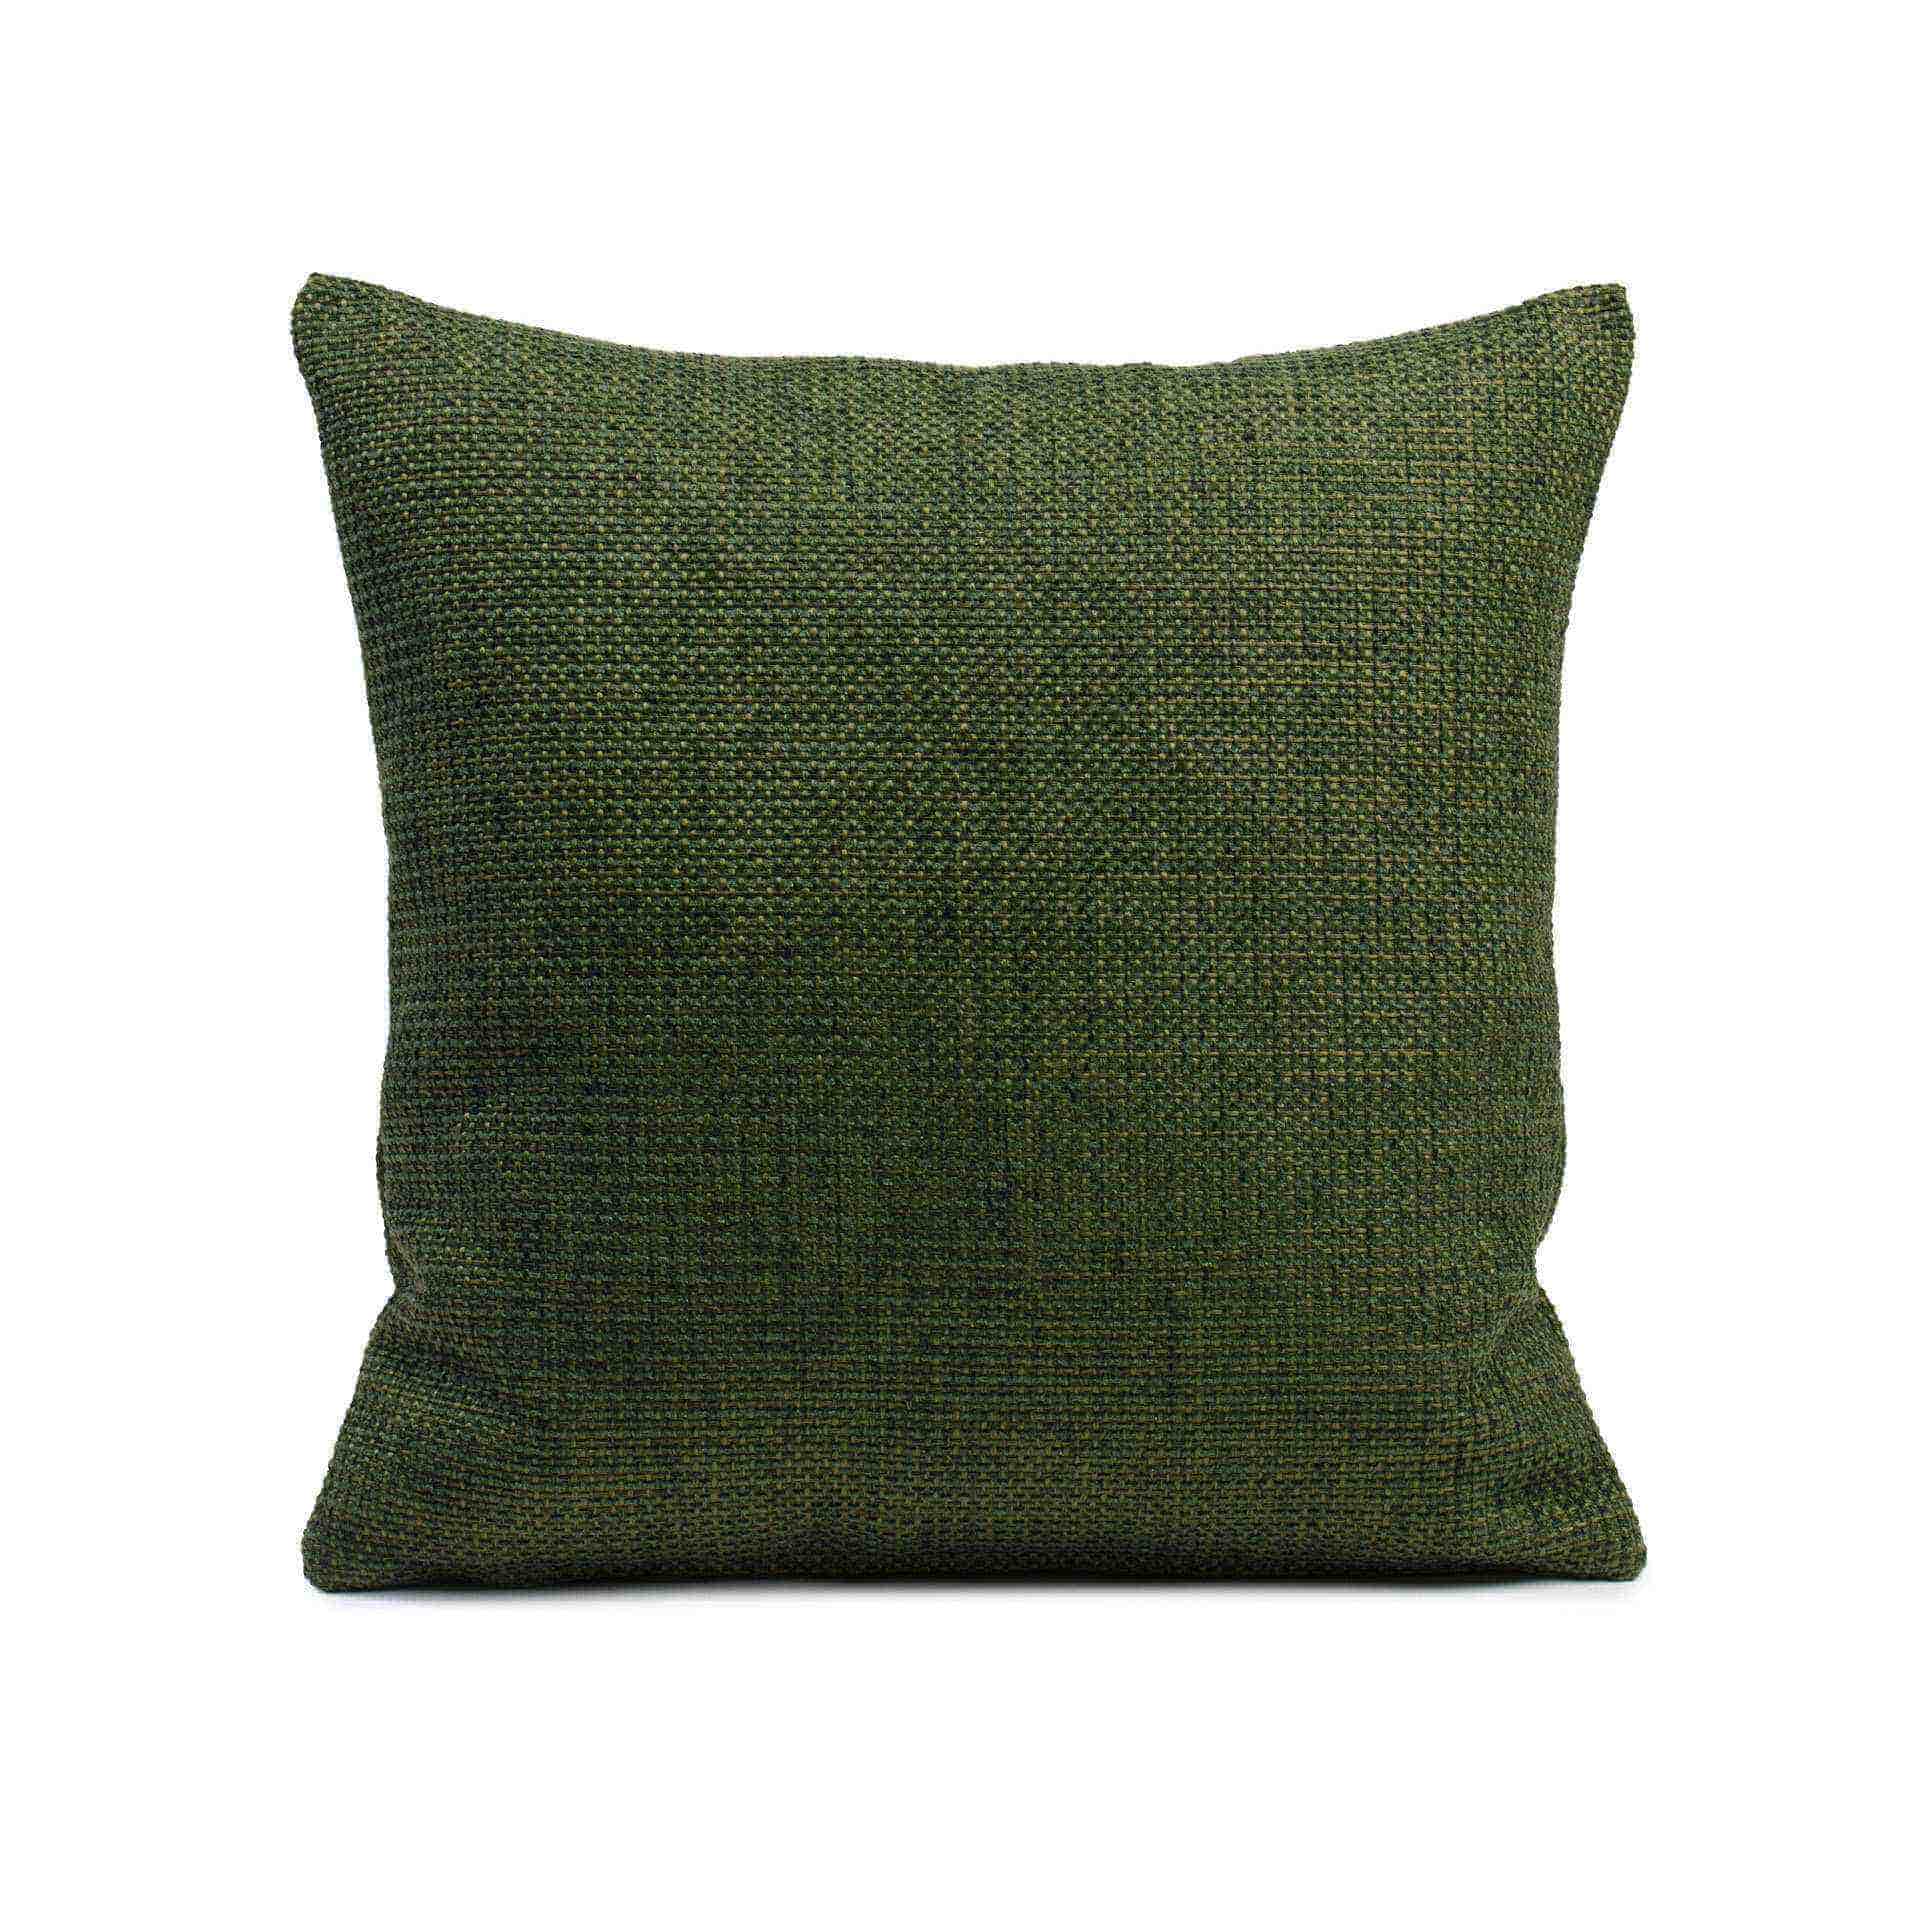 Kissenhülle - mit Reißverschluss - Serie DALLAS - dunkelgrün - Abm. 60 x 60 cm - Polyester - 85083-85-6060-D